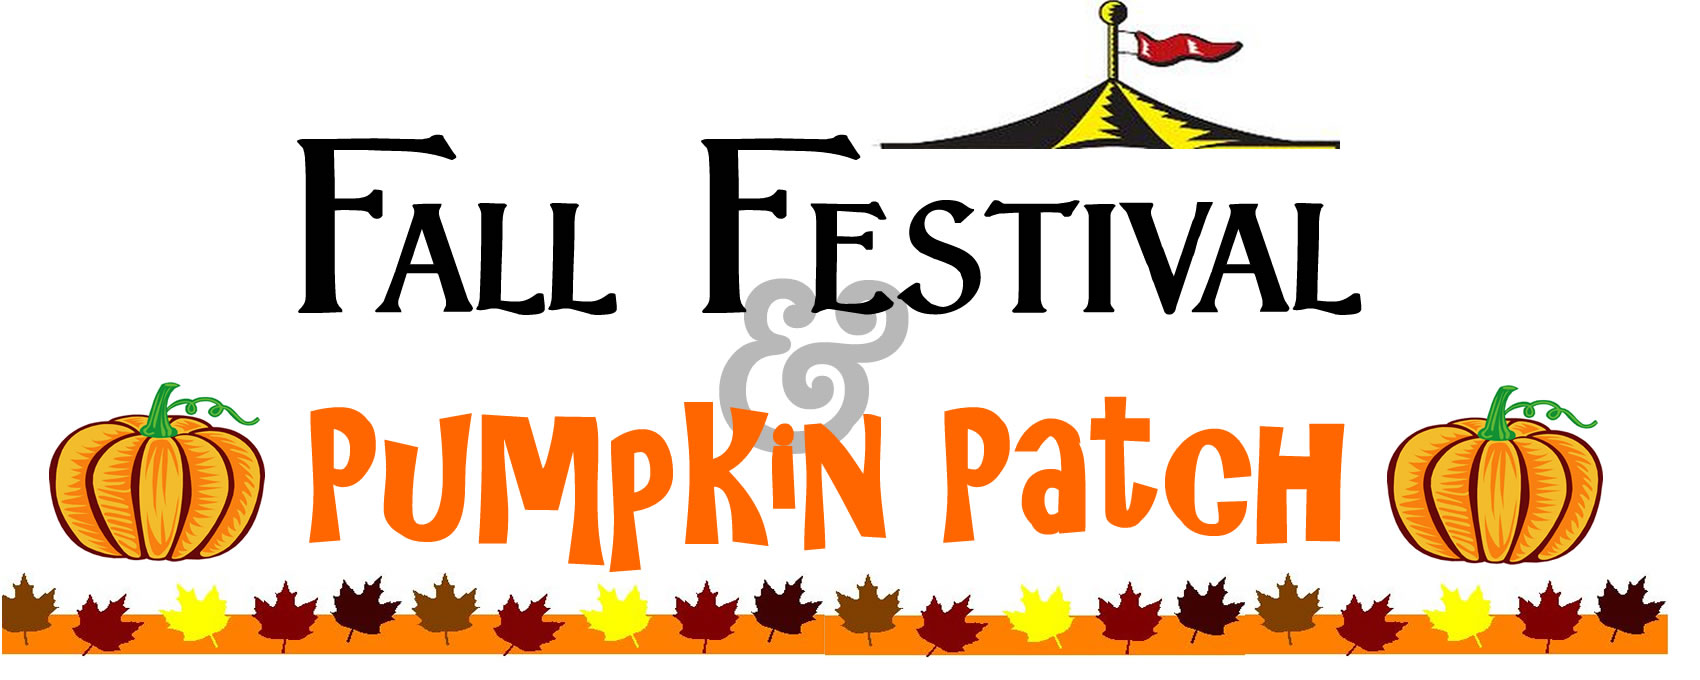 Best Fall Festival Clipart